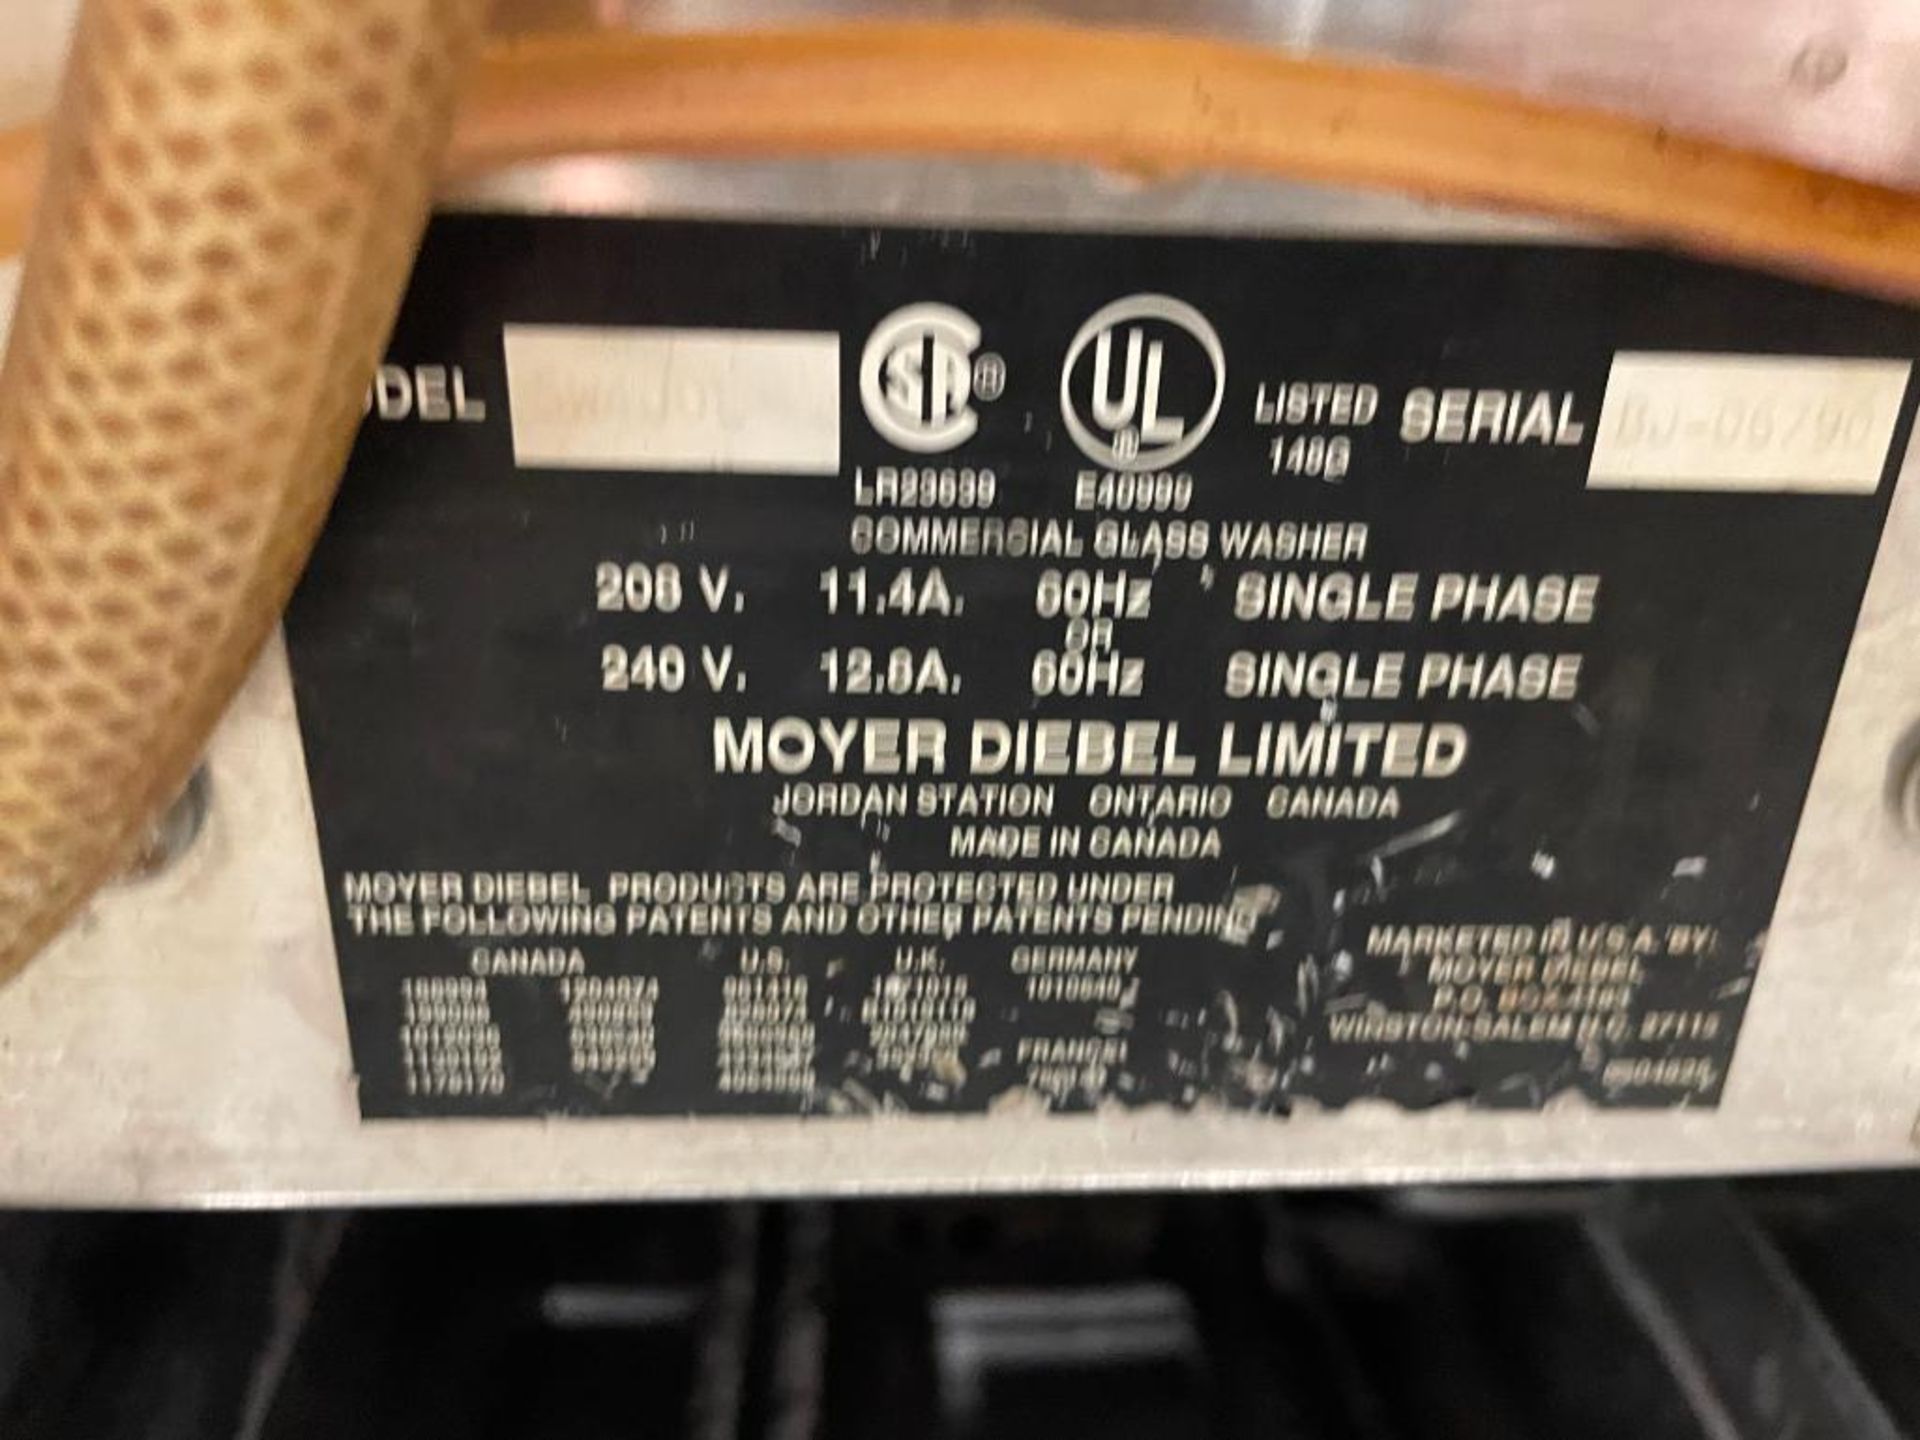 MOYER DIEBEL SW400 PASS THROUGH DISHWASHER - Image 5 of 12